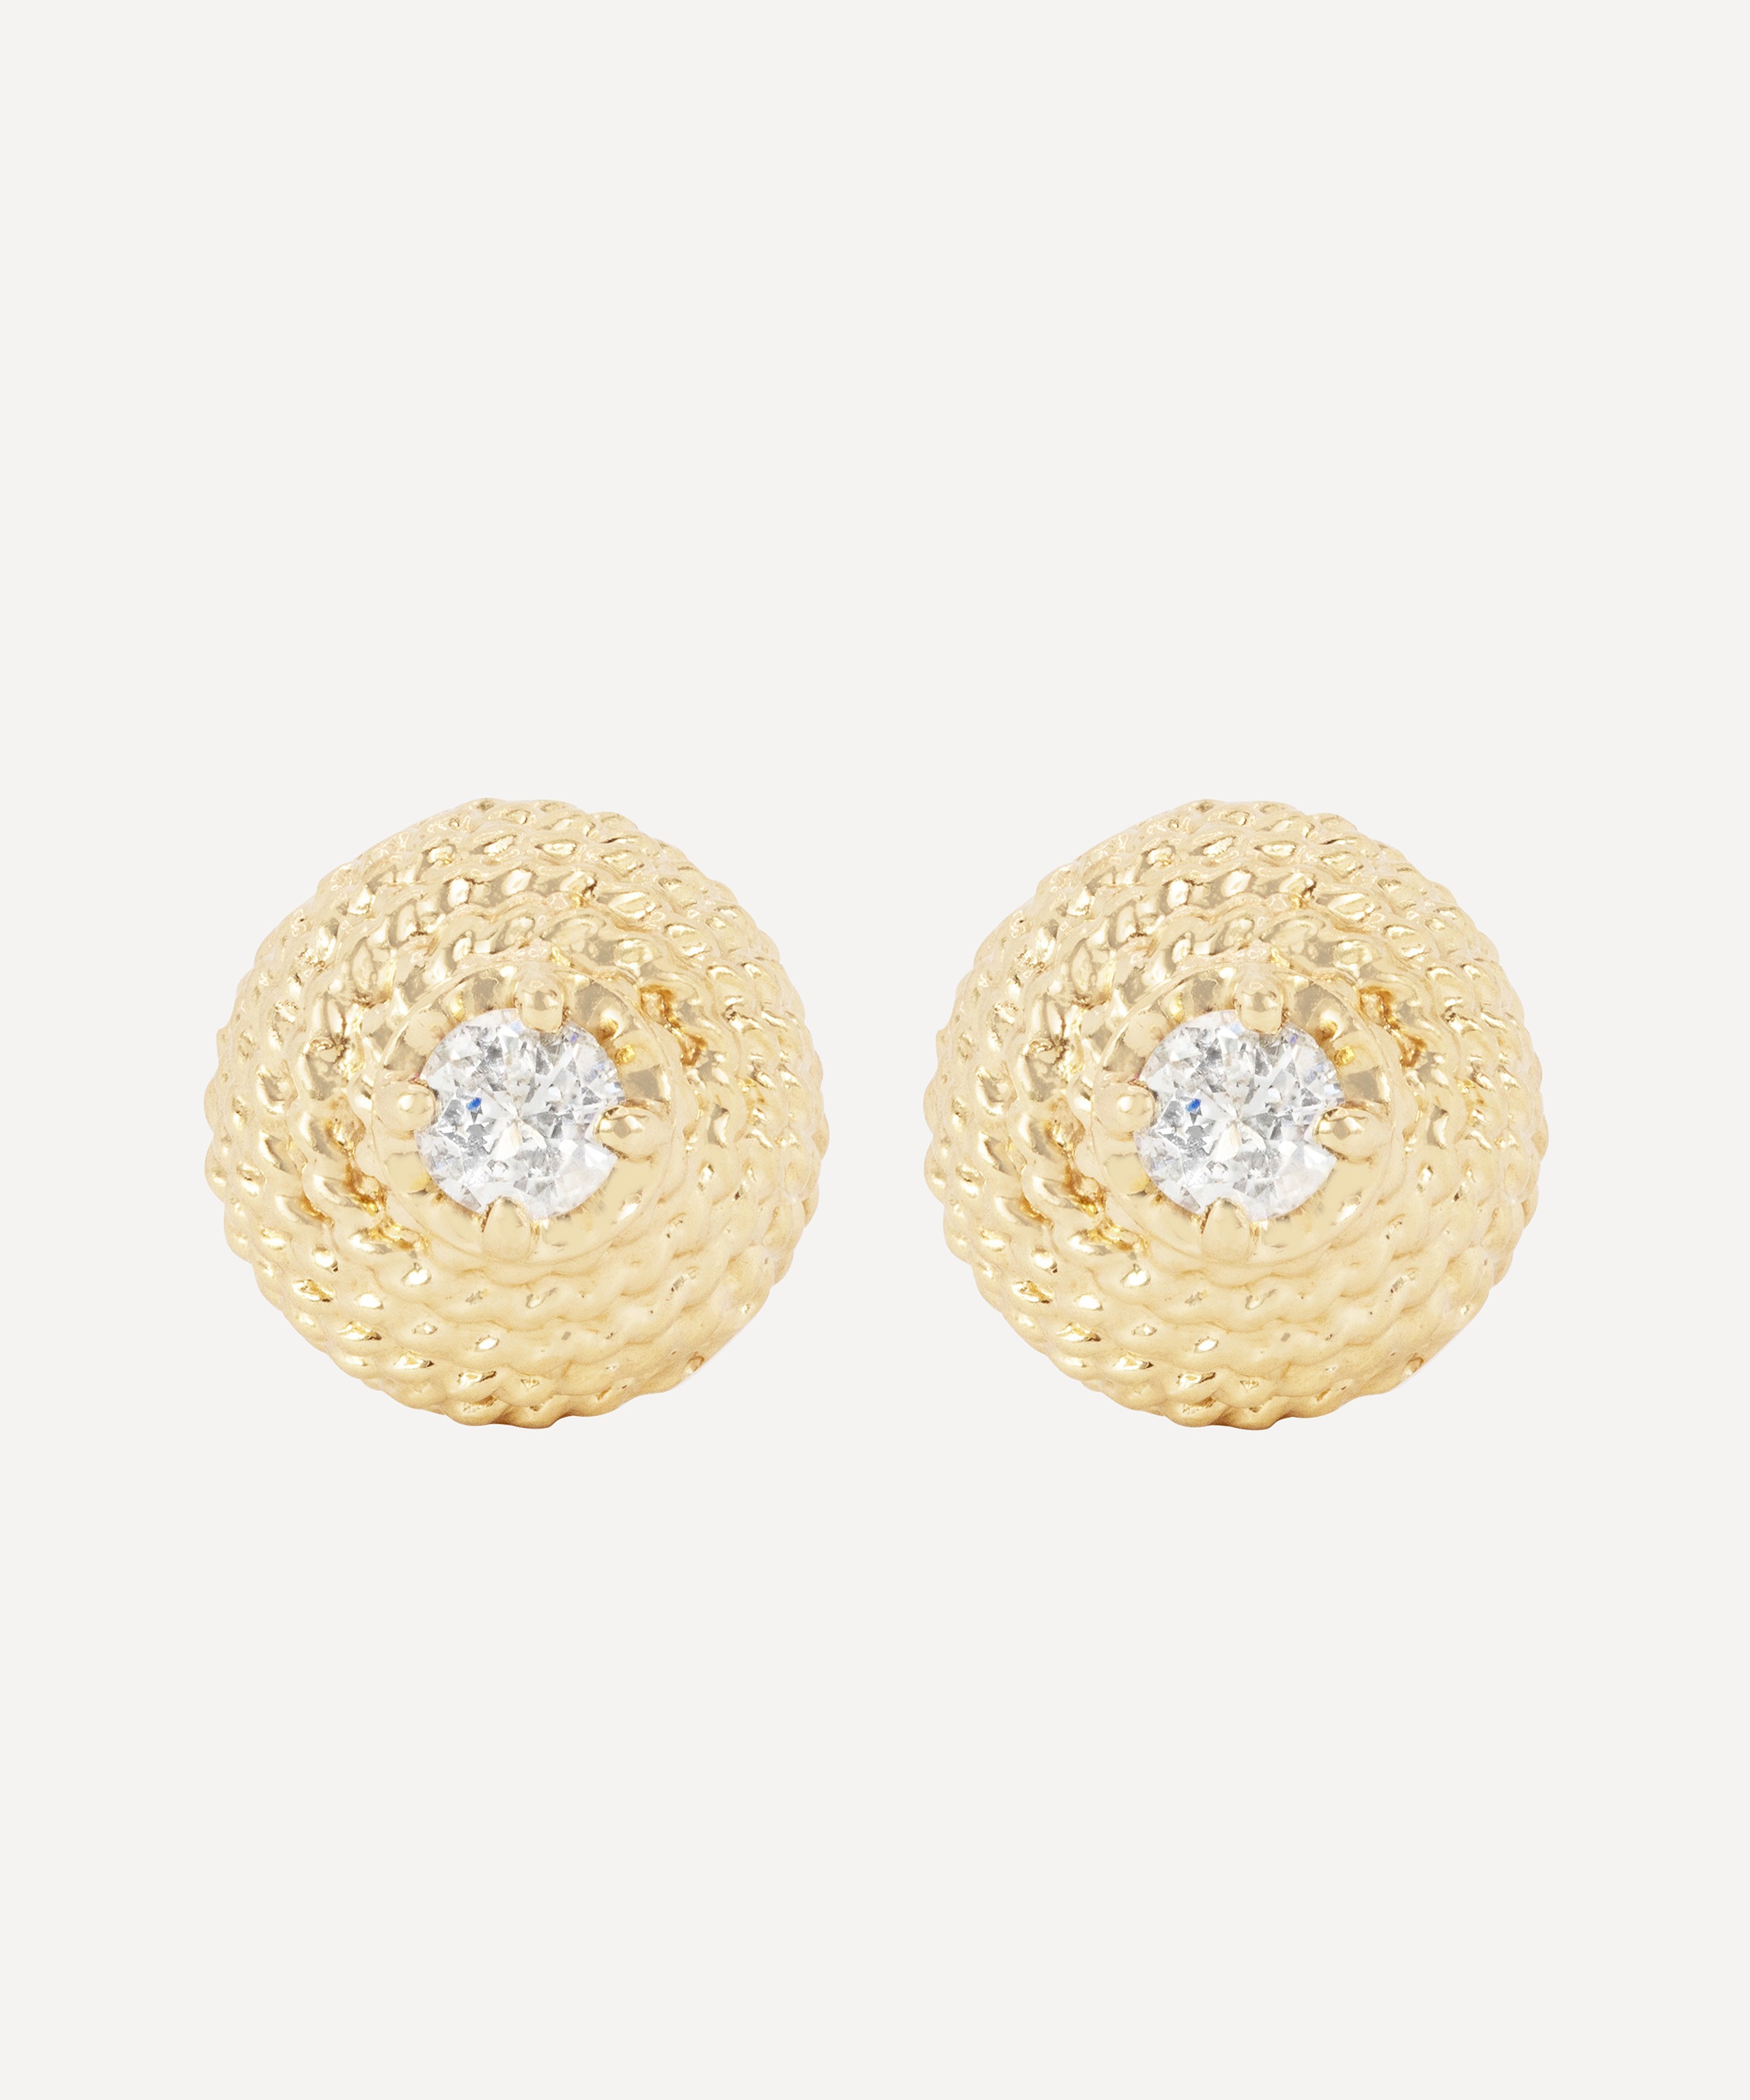 Kojis - 14ct Gold Textured Diamond Stud Earrings